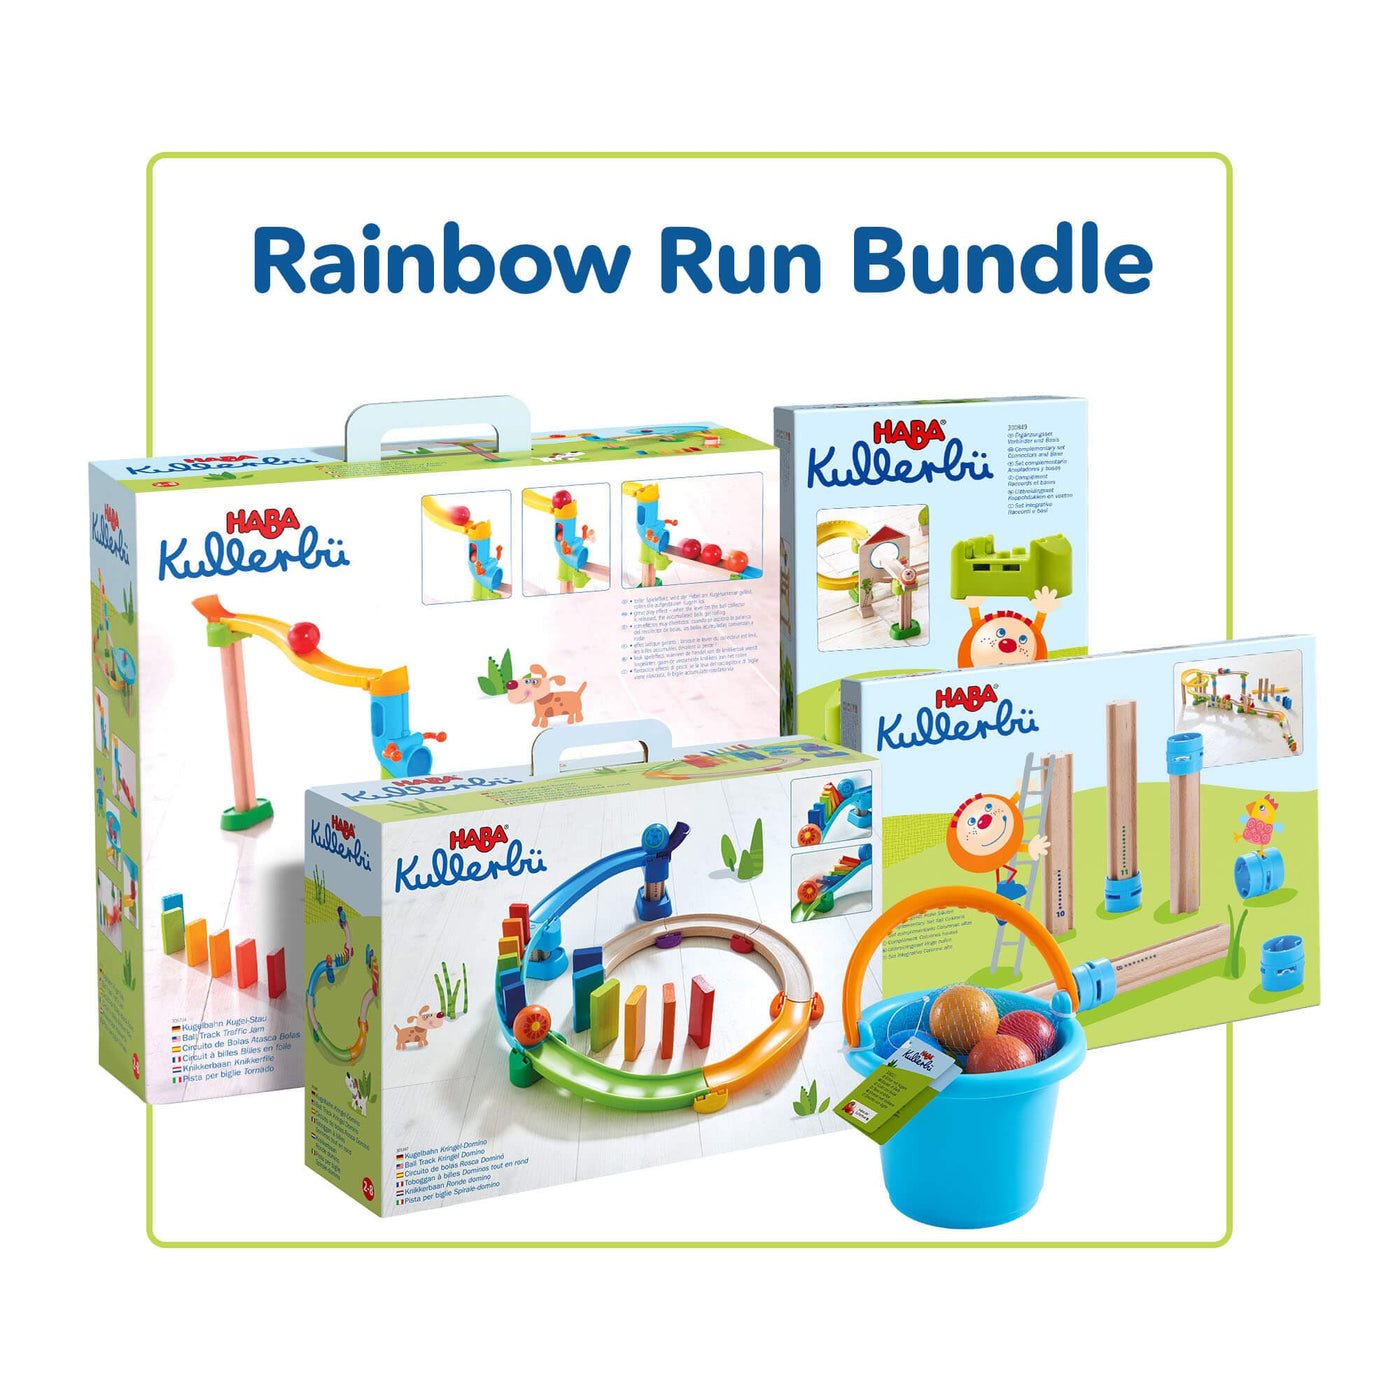 Kullerbu Rainbow Run Bundle - HABA USA